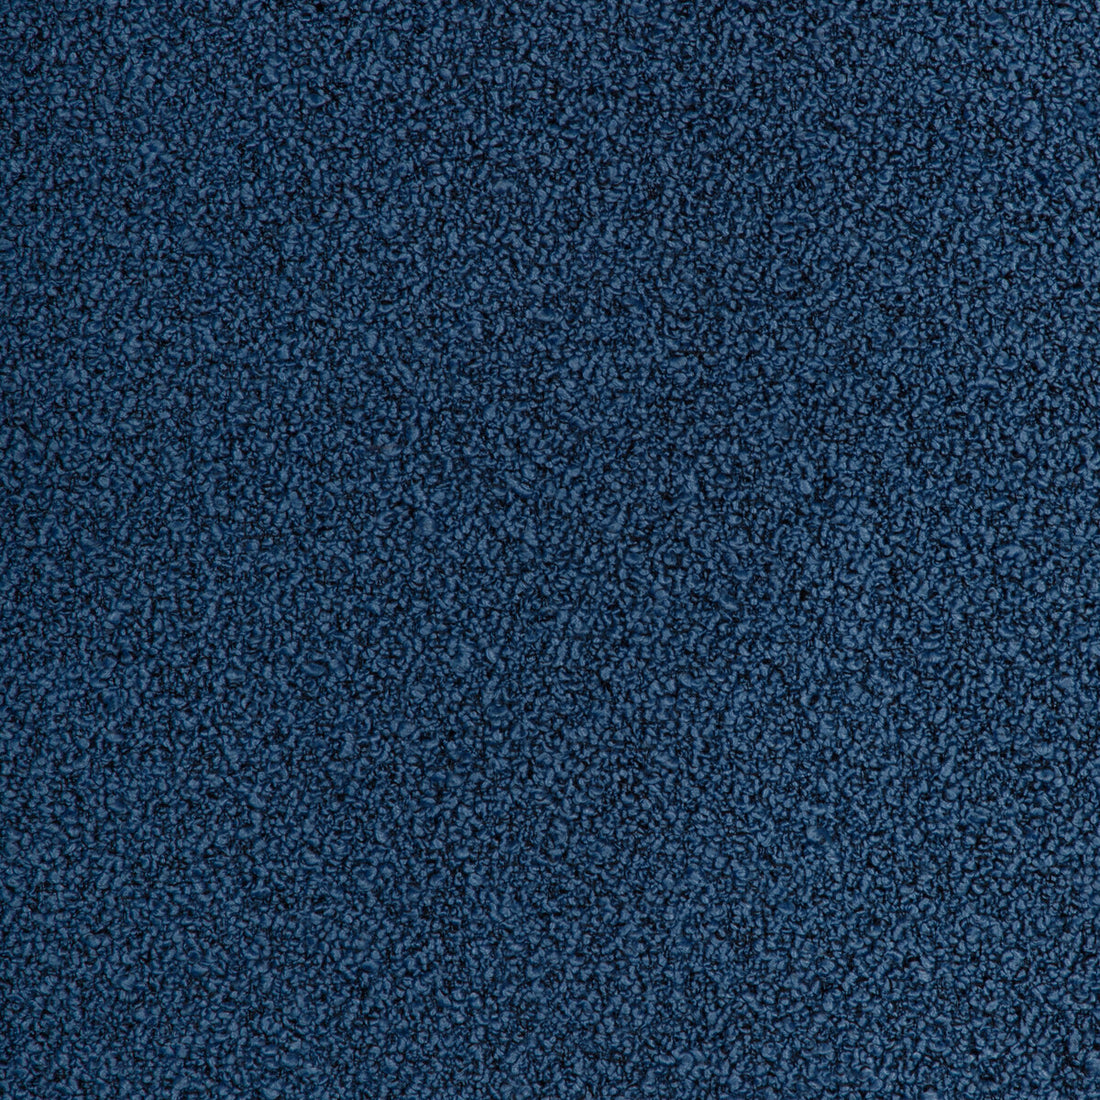 Kravet Smart fabric in 37093-5 color - pattern 37093.5.0 - by Kravet Smart